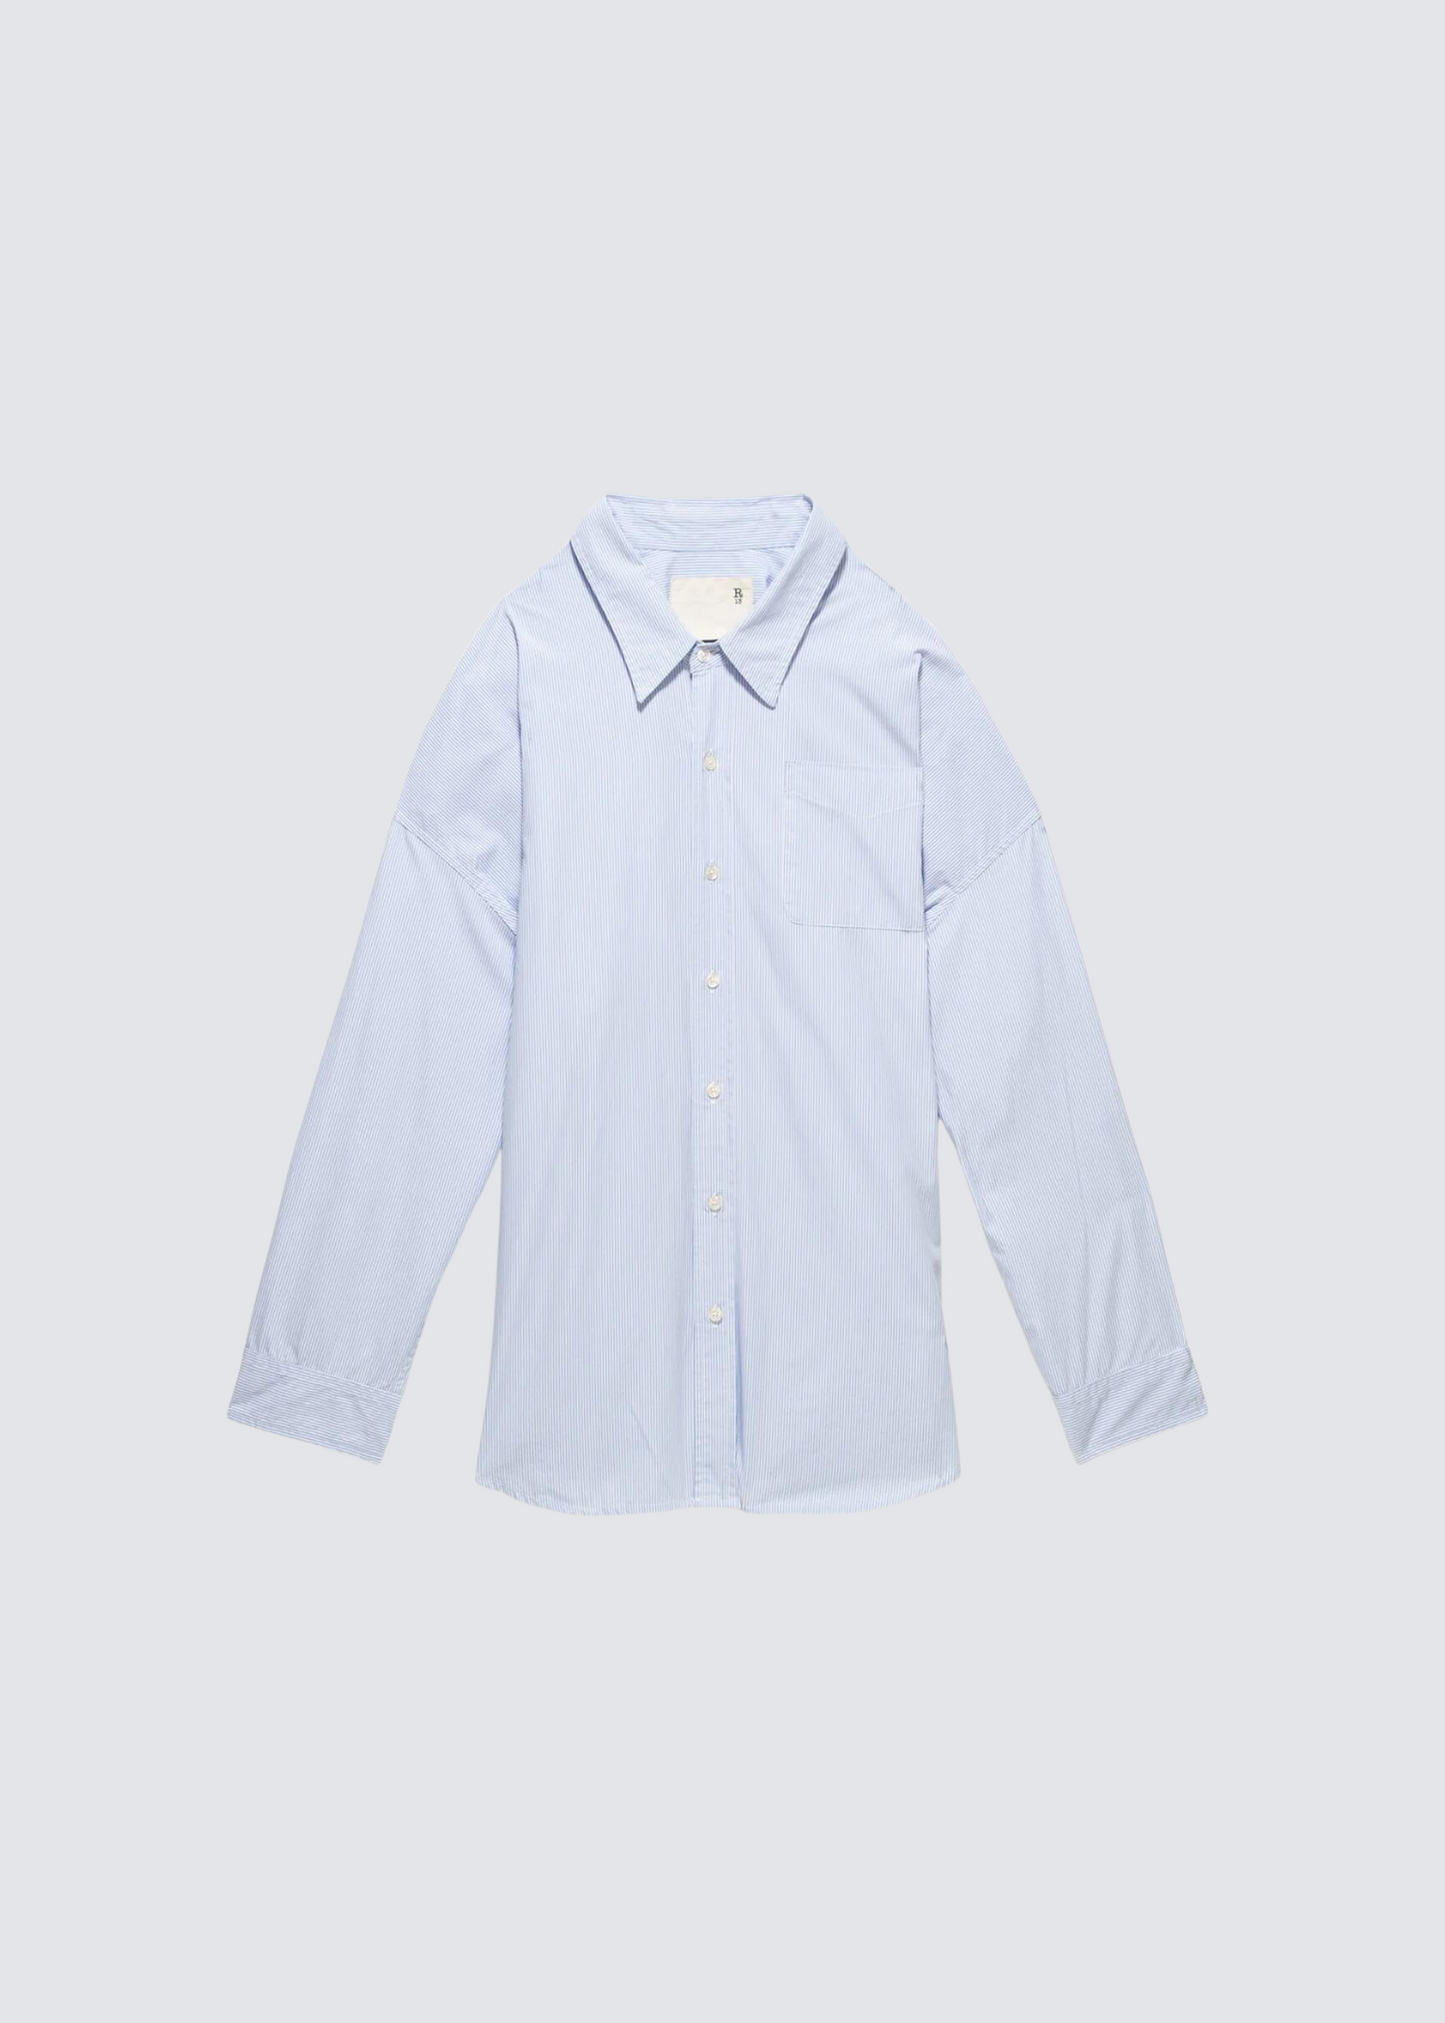 Drop Neck Oxford Shirt, Blue/White Pinstripe, Hemd